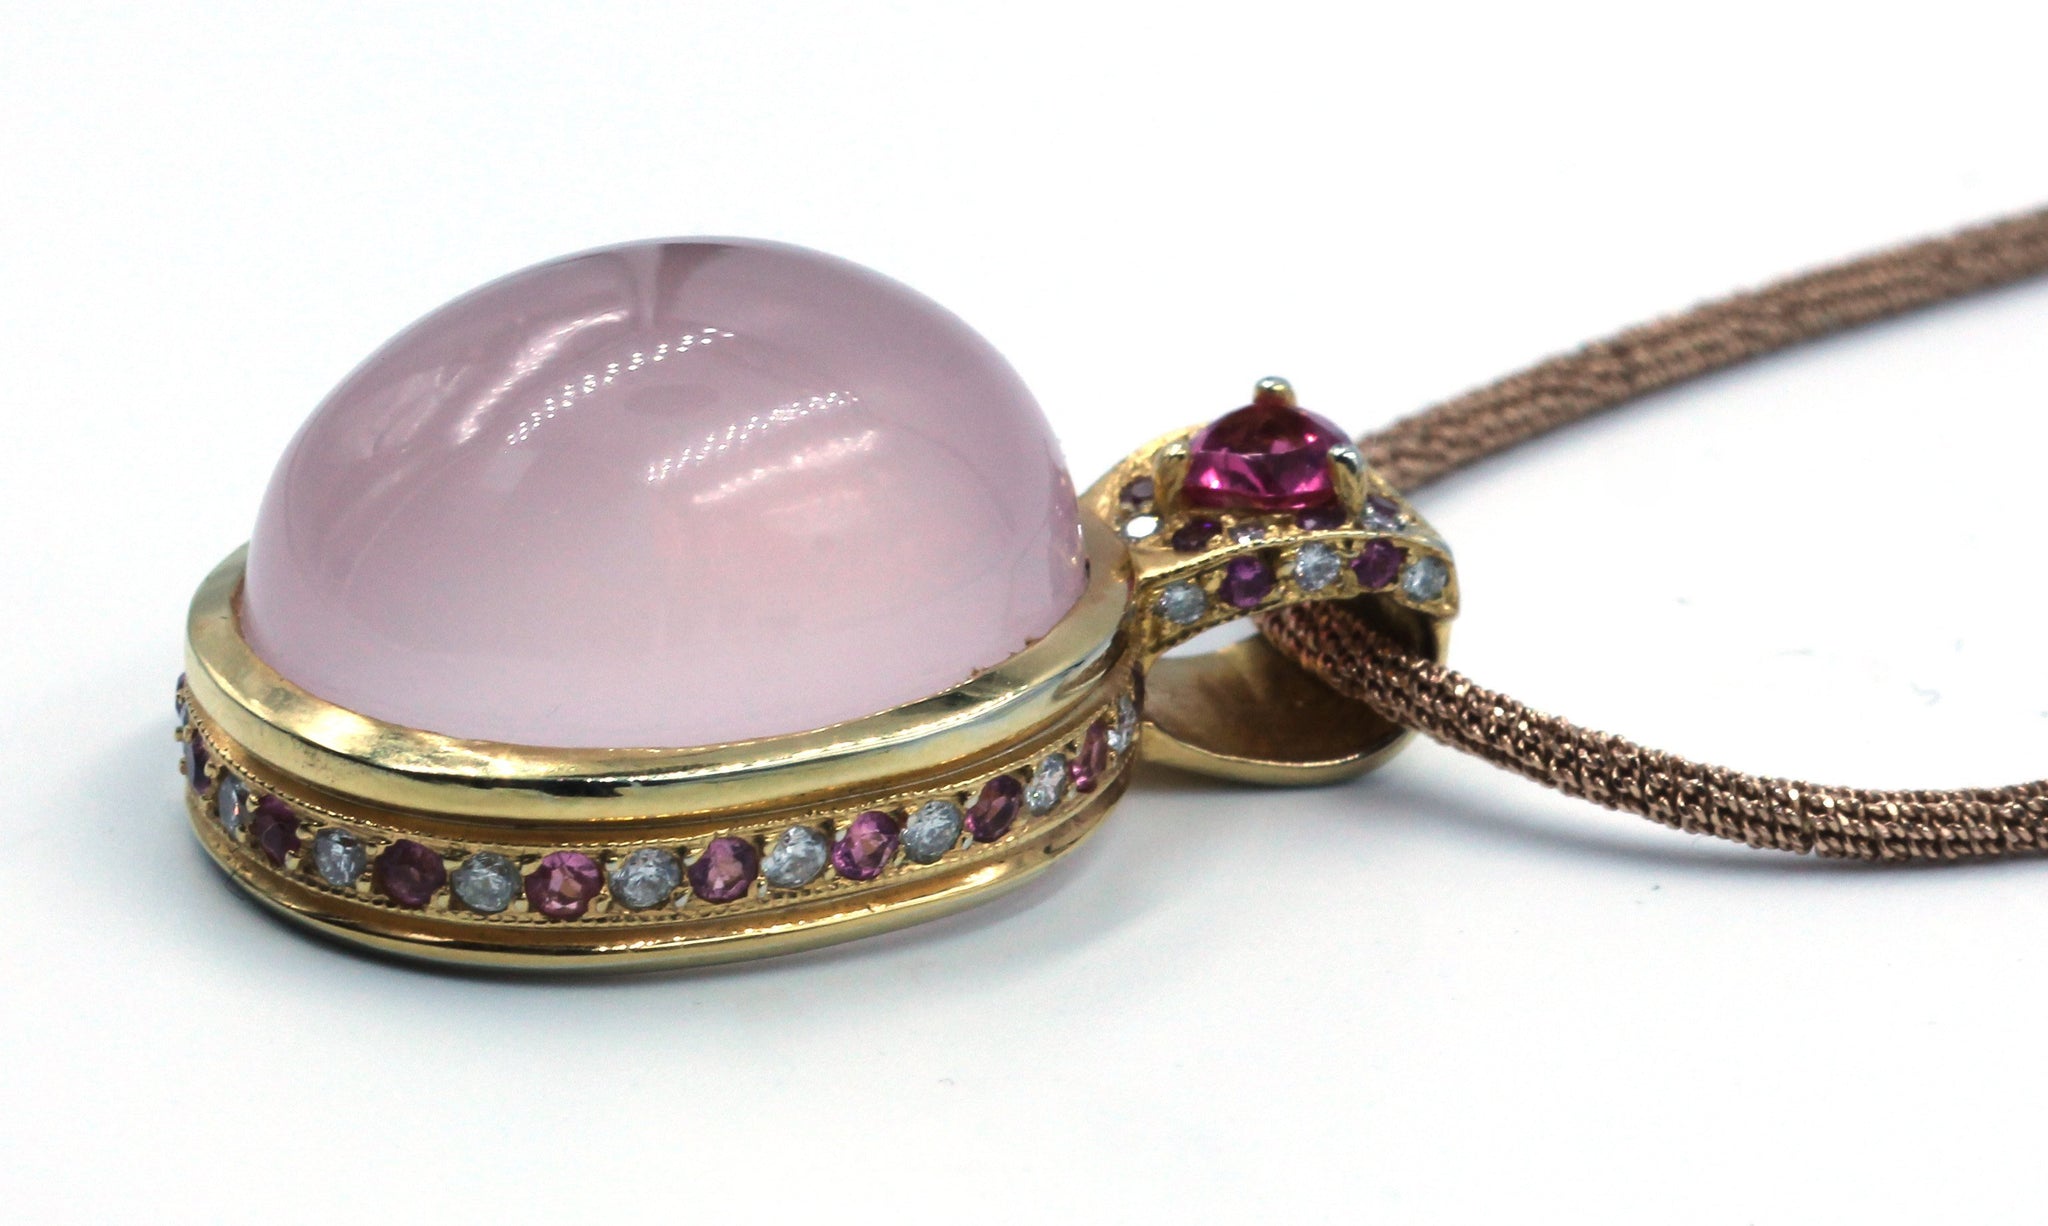 Vintage Rose Quartz, Tourmaline and Diamond Necklace, SOLD